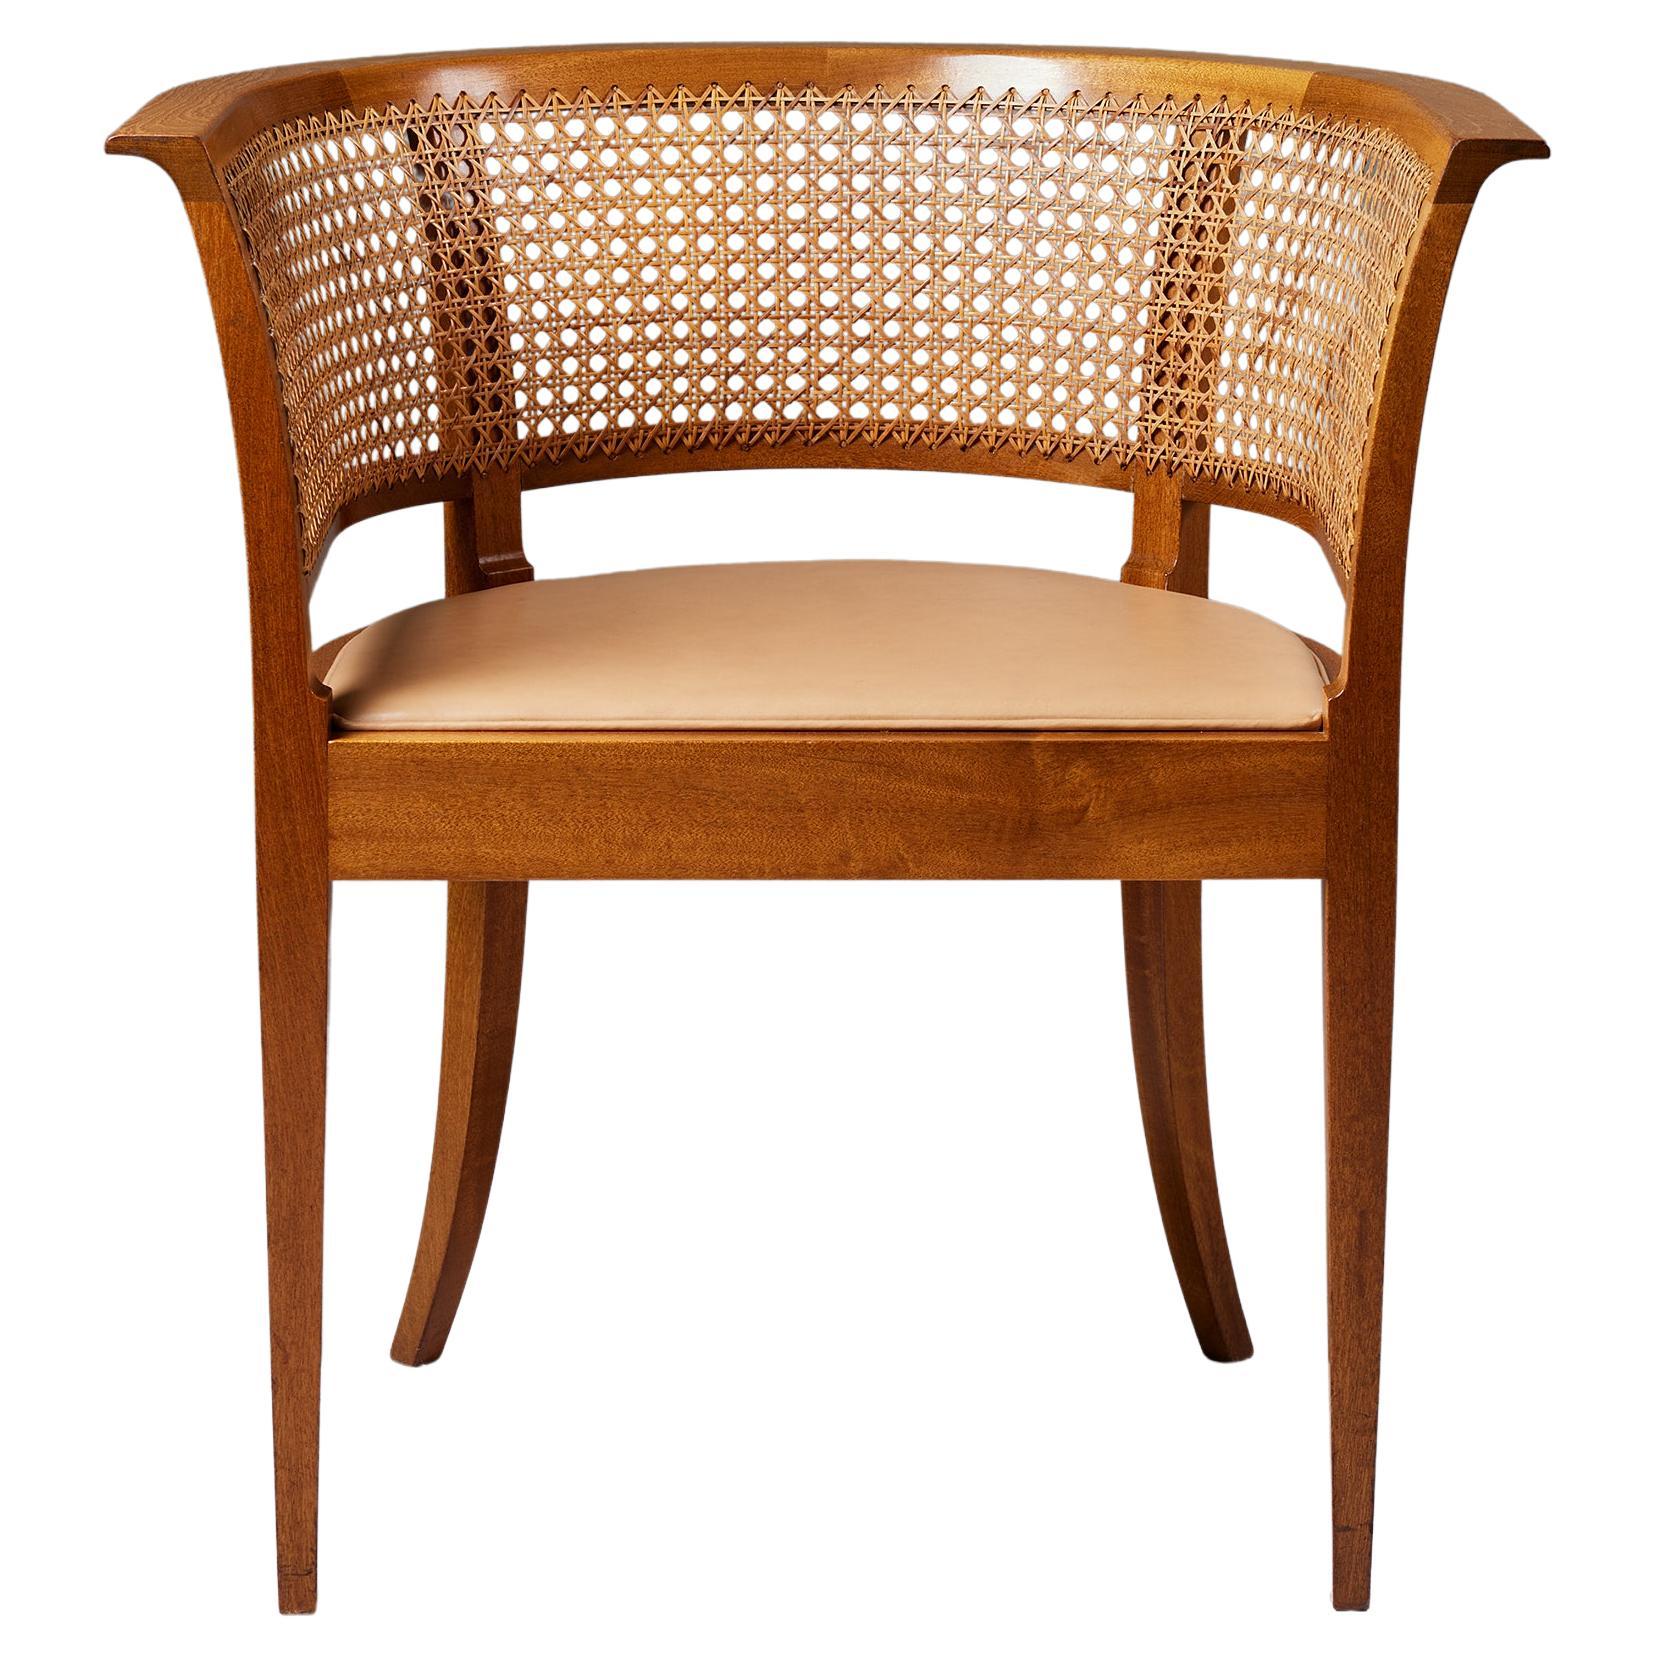 ‘The Faaborg Chair’ Designed by Kaare Klint, Denmark, 1914